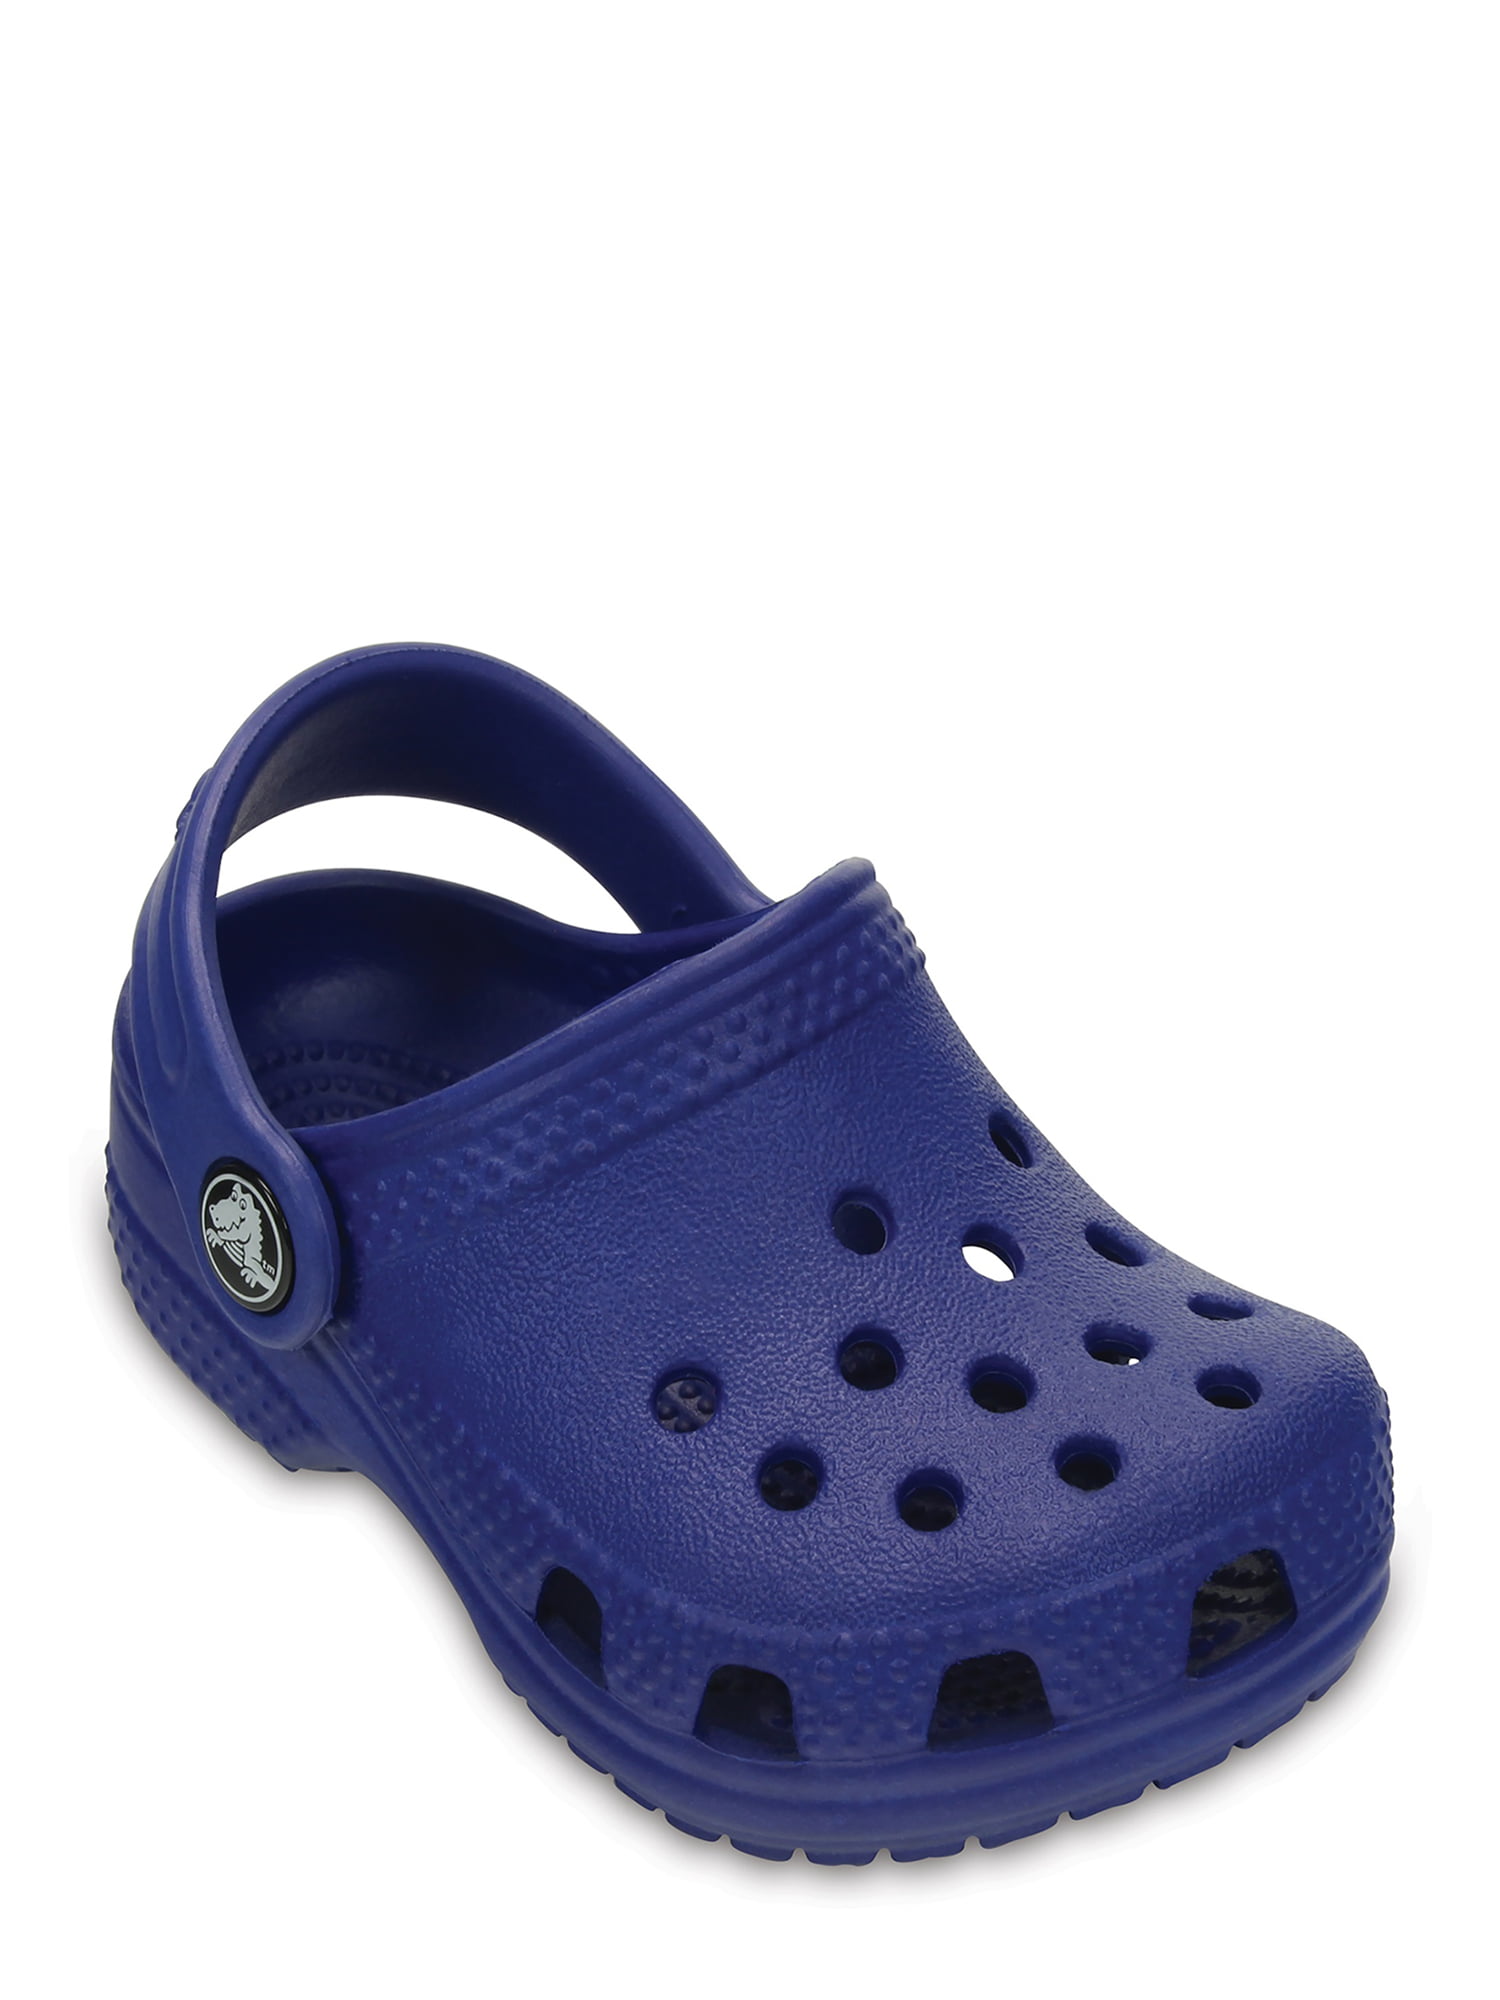 purple crocs size 6